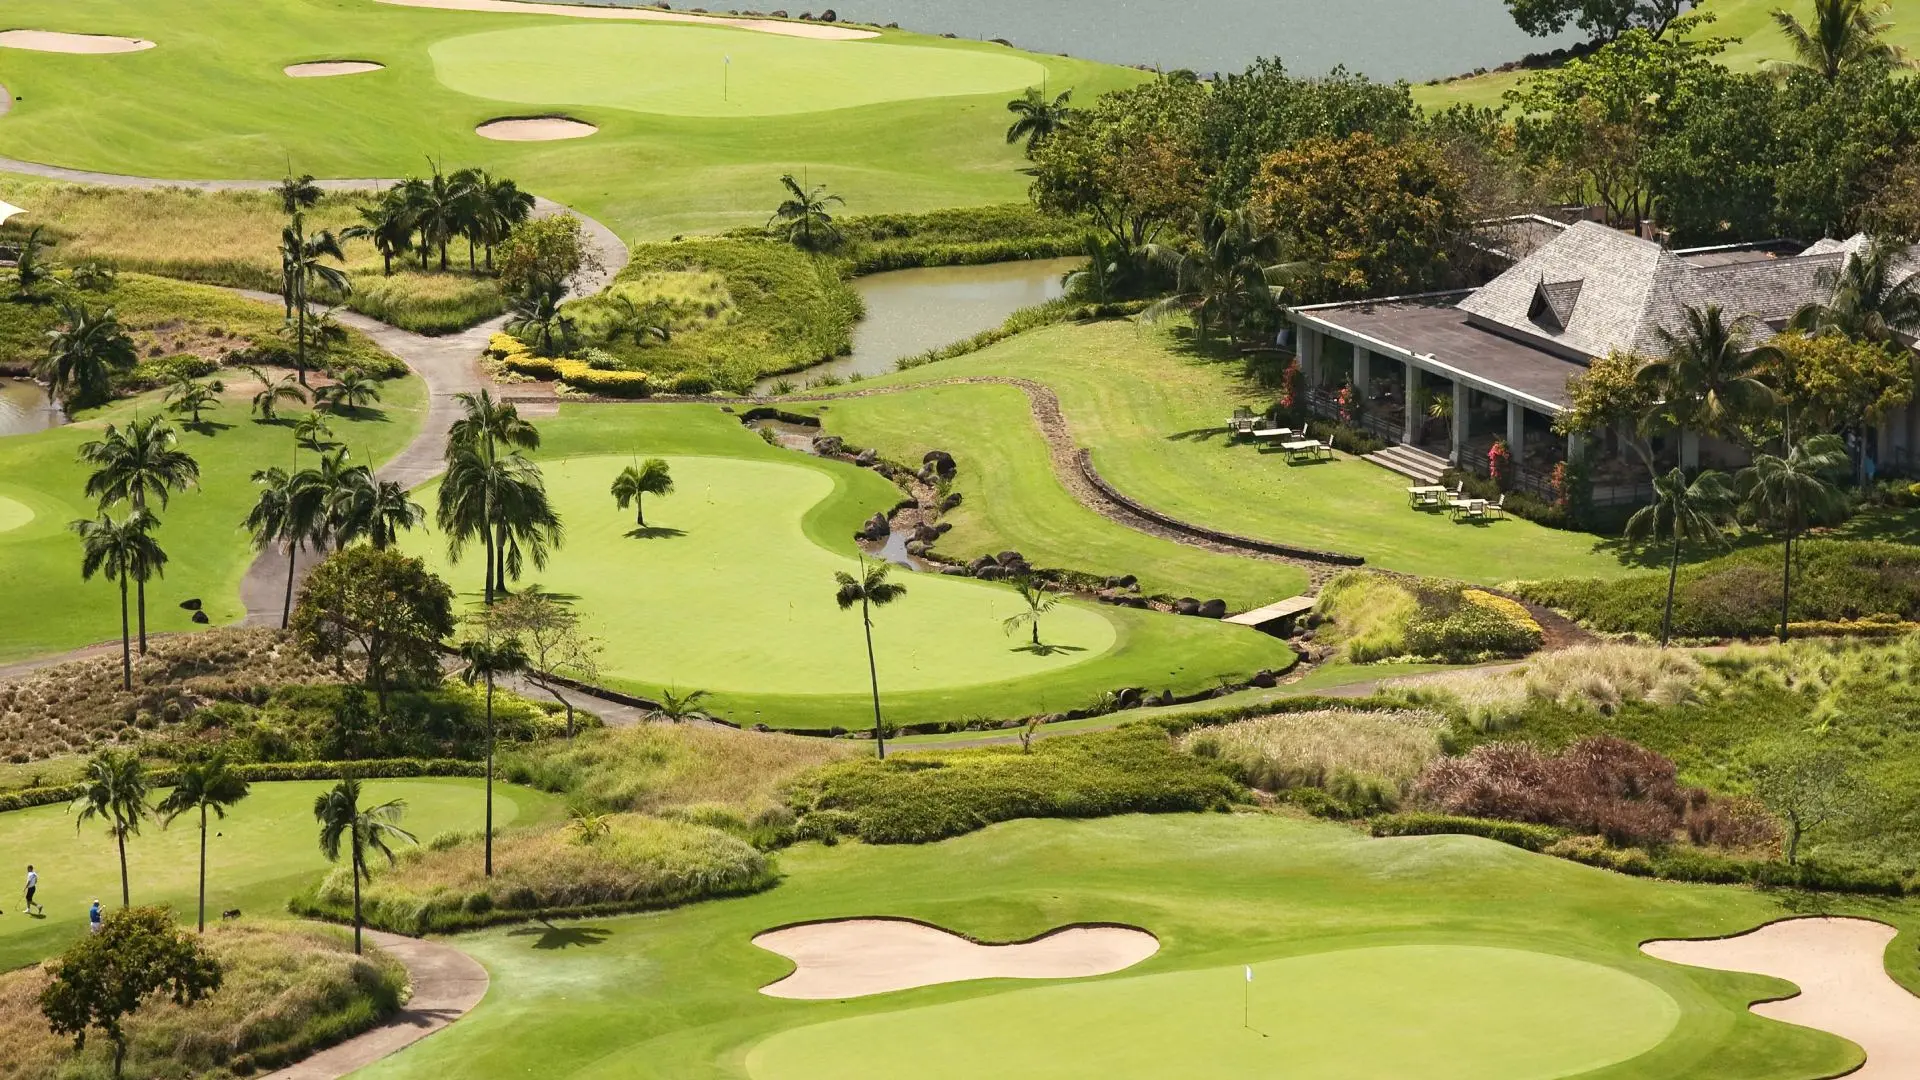 Le Club house heritage golf club mauritius